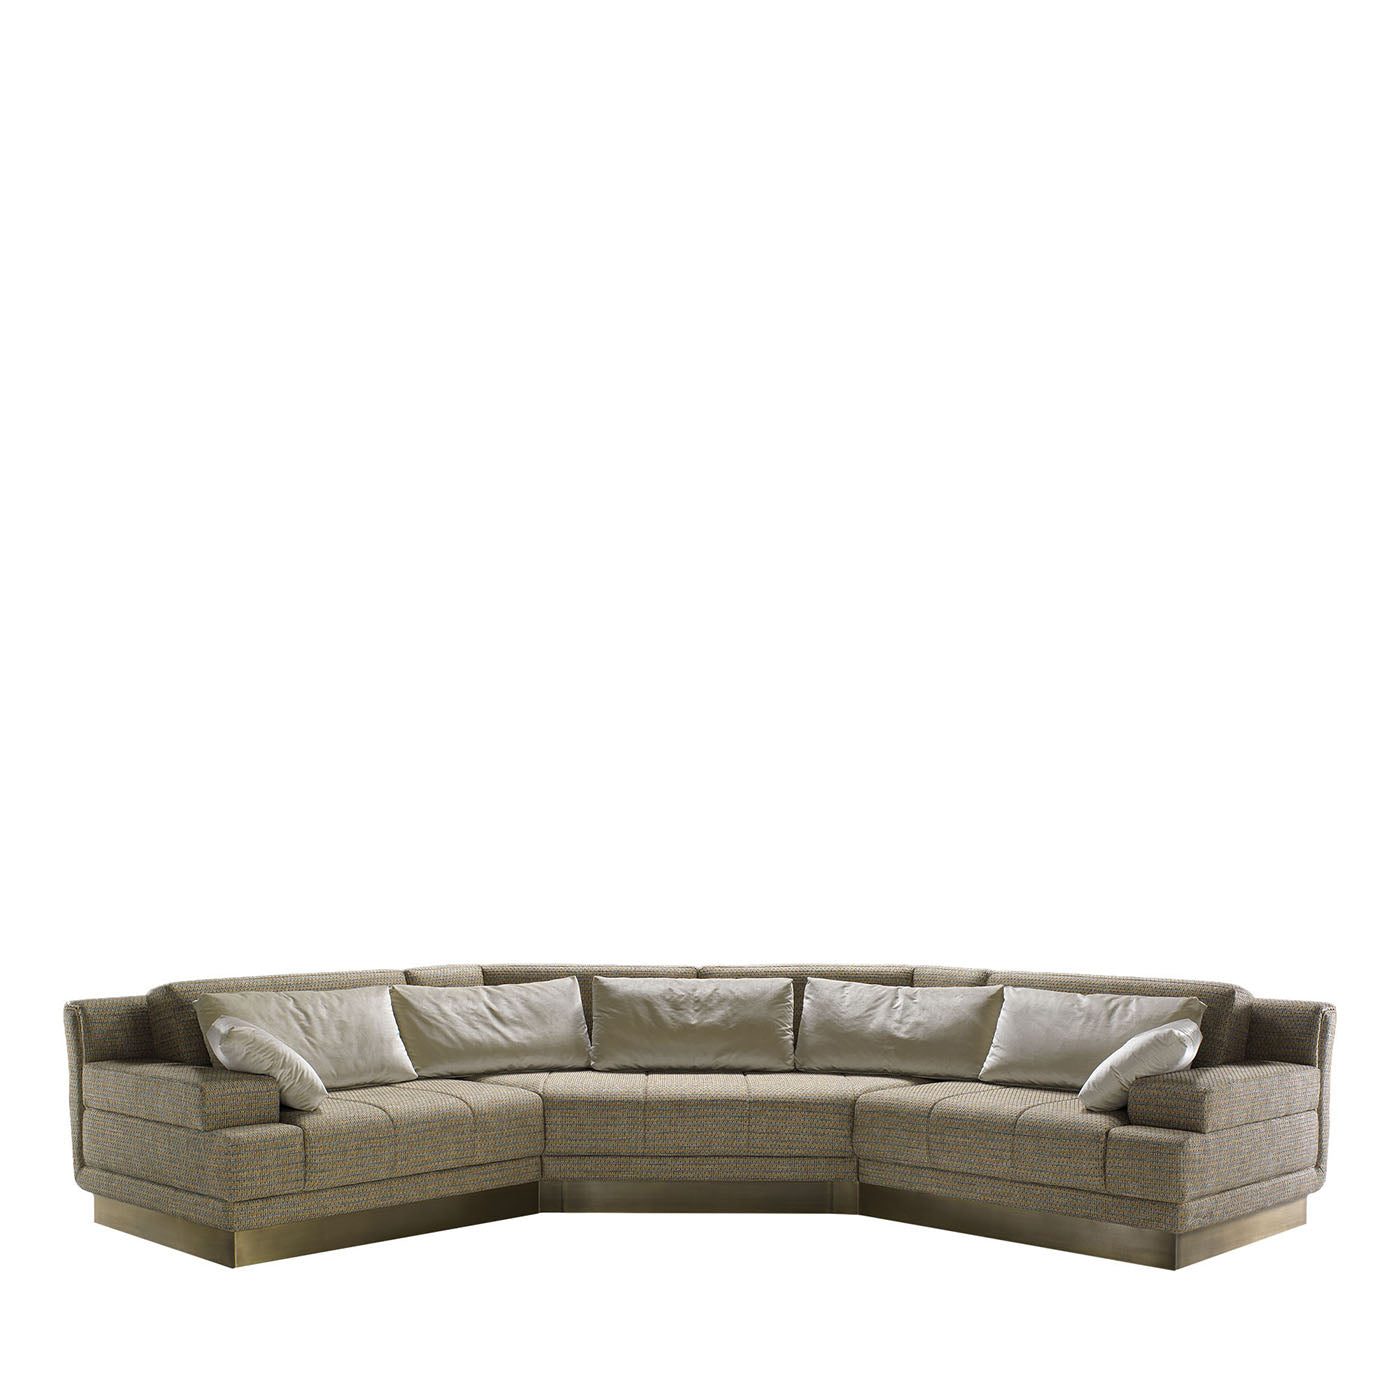 Boulevard Melange Brown & Gray Modular Sofa - Hauptansicht